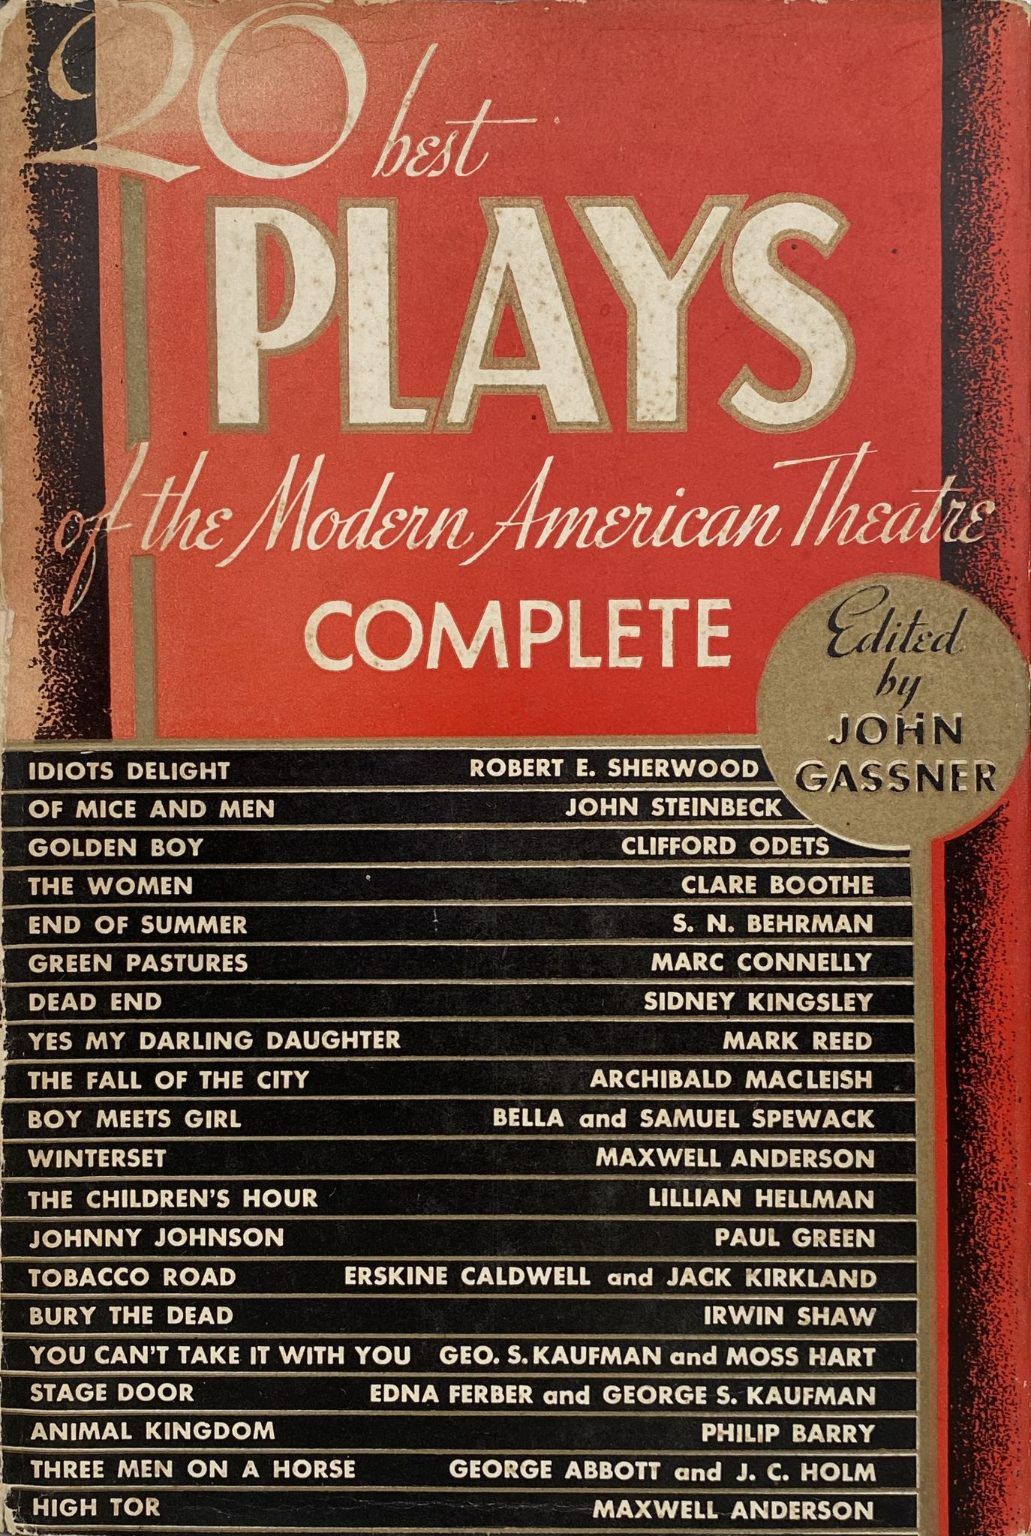 TWENTY PLAYS of The Modern American Theatre